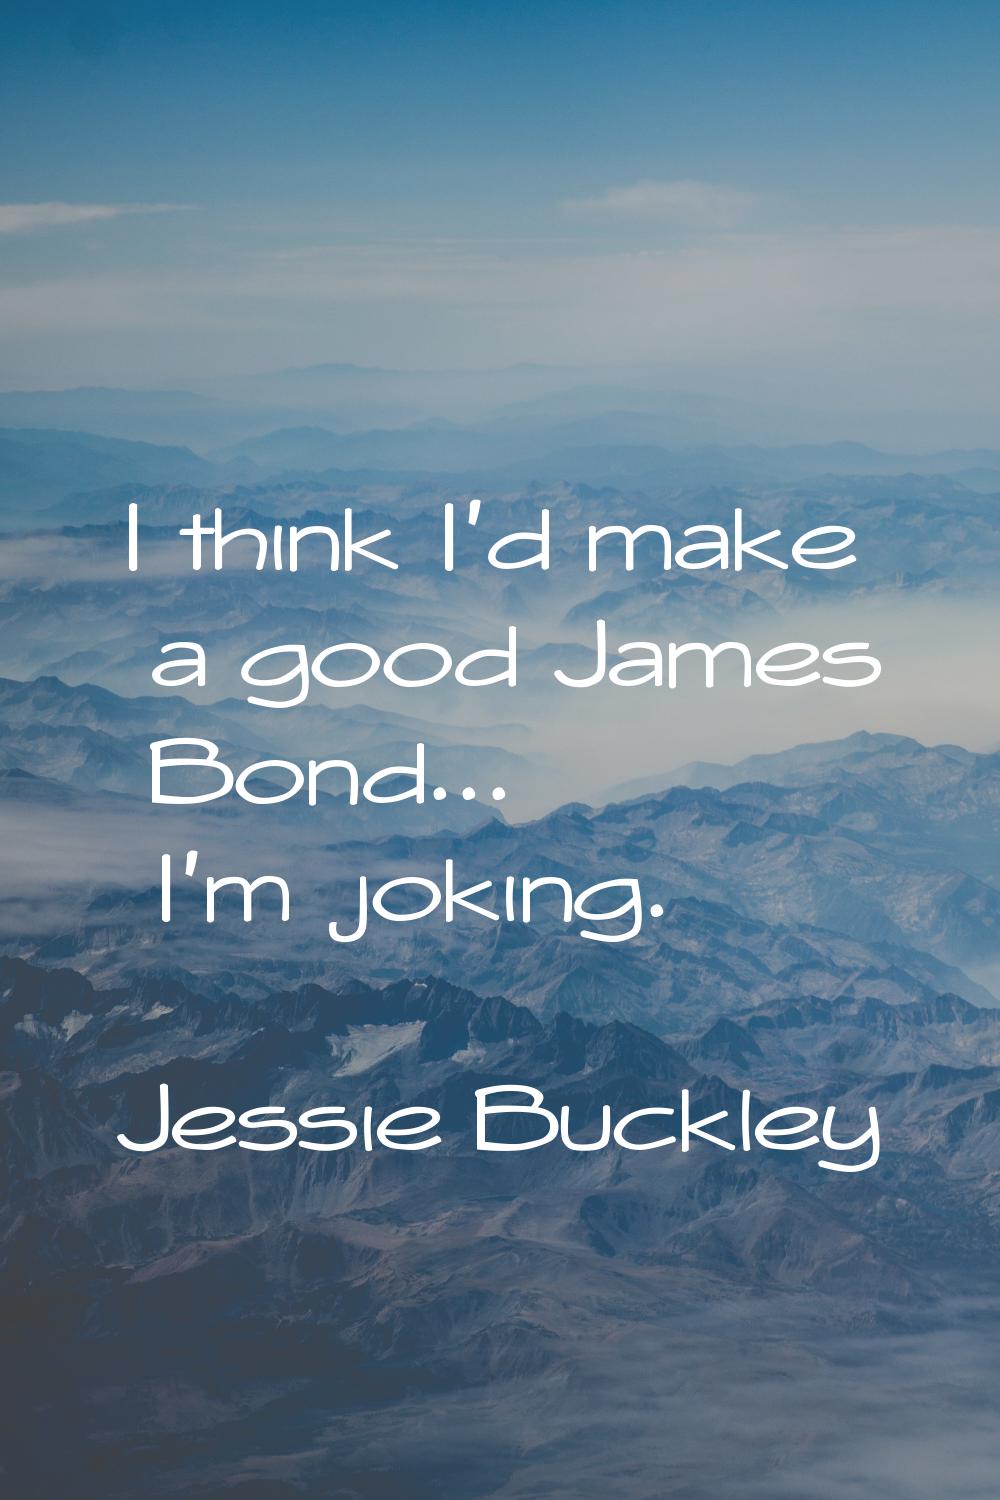 I think I'd make a good James Bond... I'm joking.